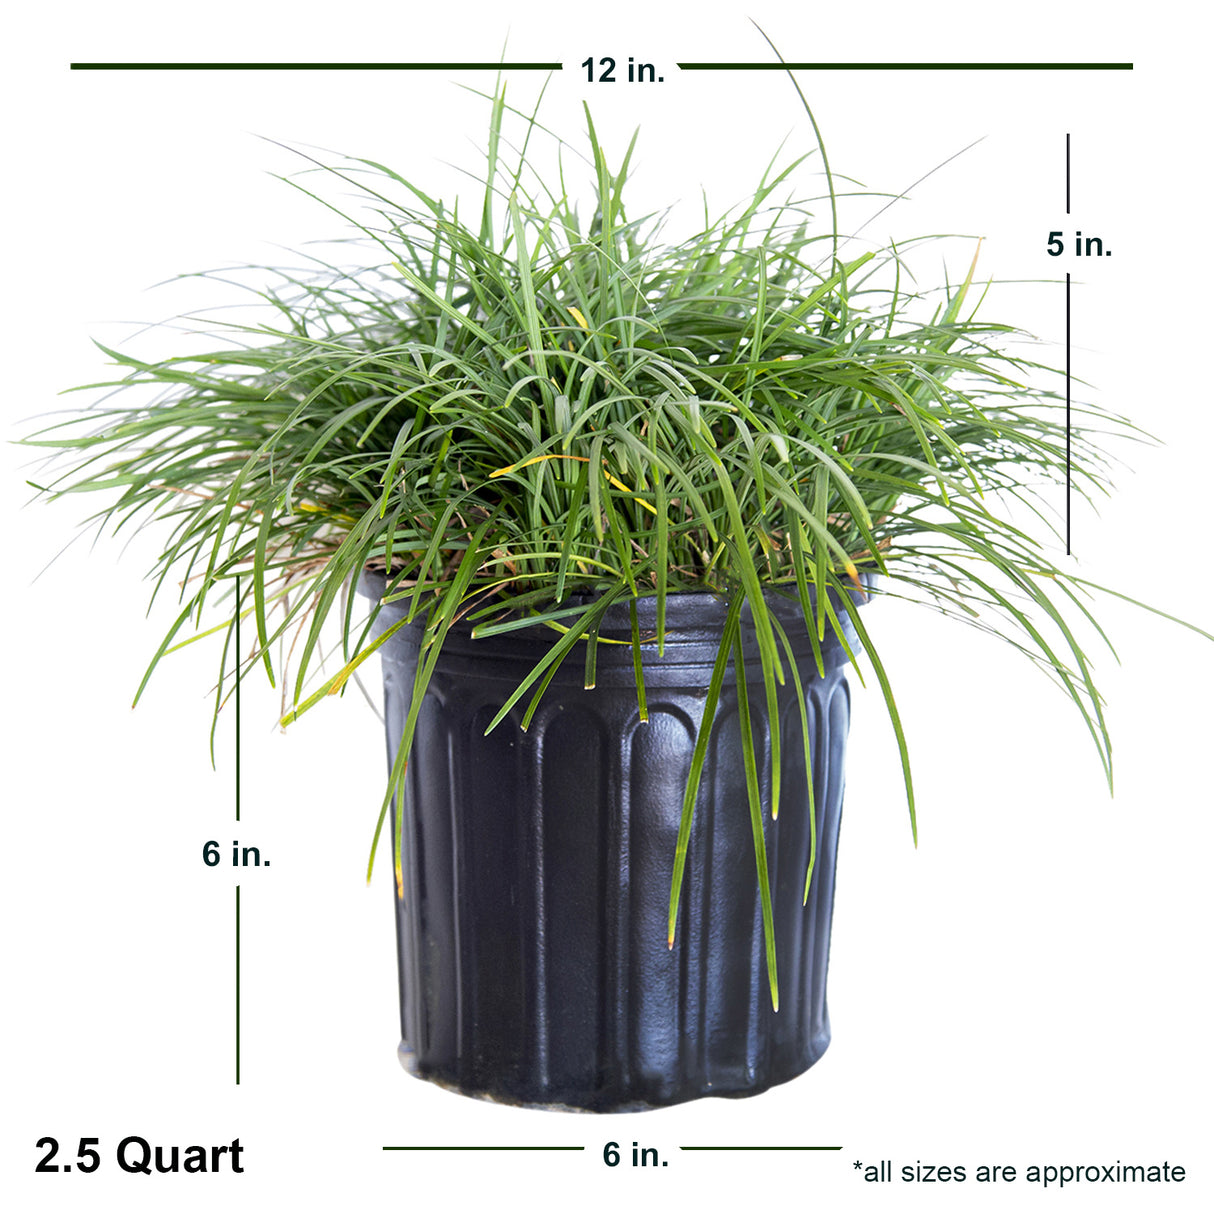 2.5 Quart Mondo grass in black container showing dimensions